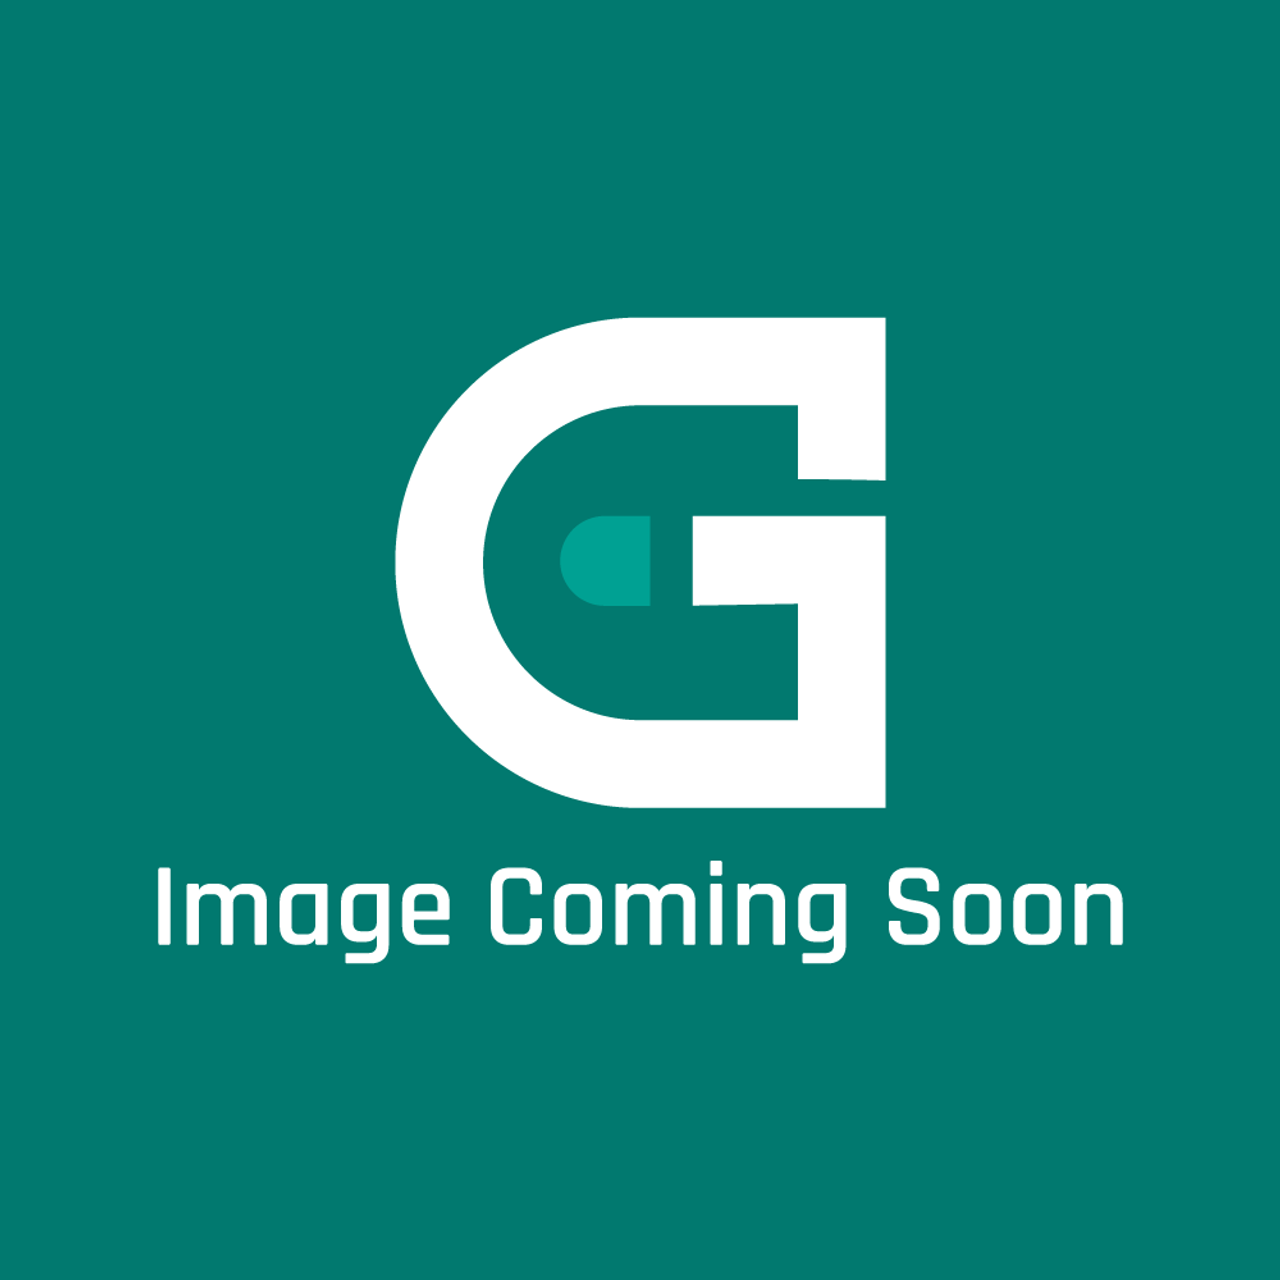 AGA Marvel RS4F999013 - Firebrick Top Rhs 3-254-8B Ray - Image Coming Soon!